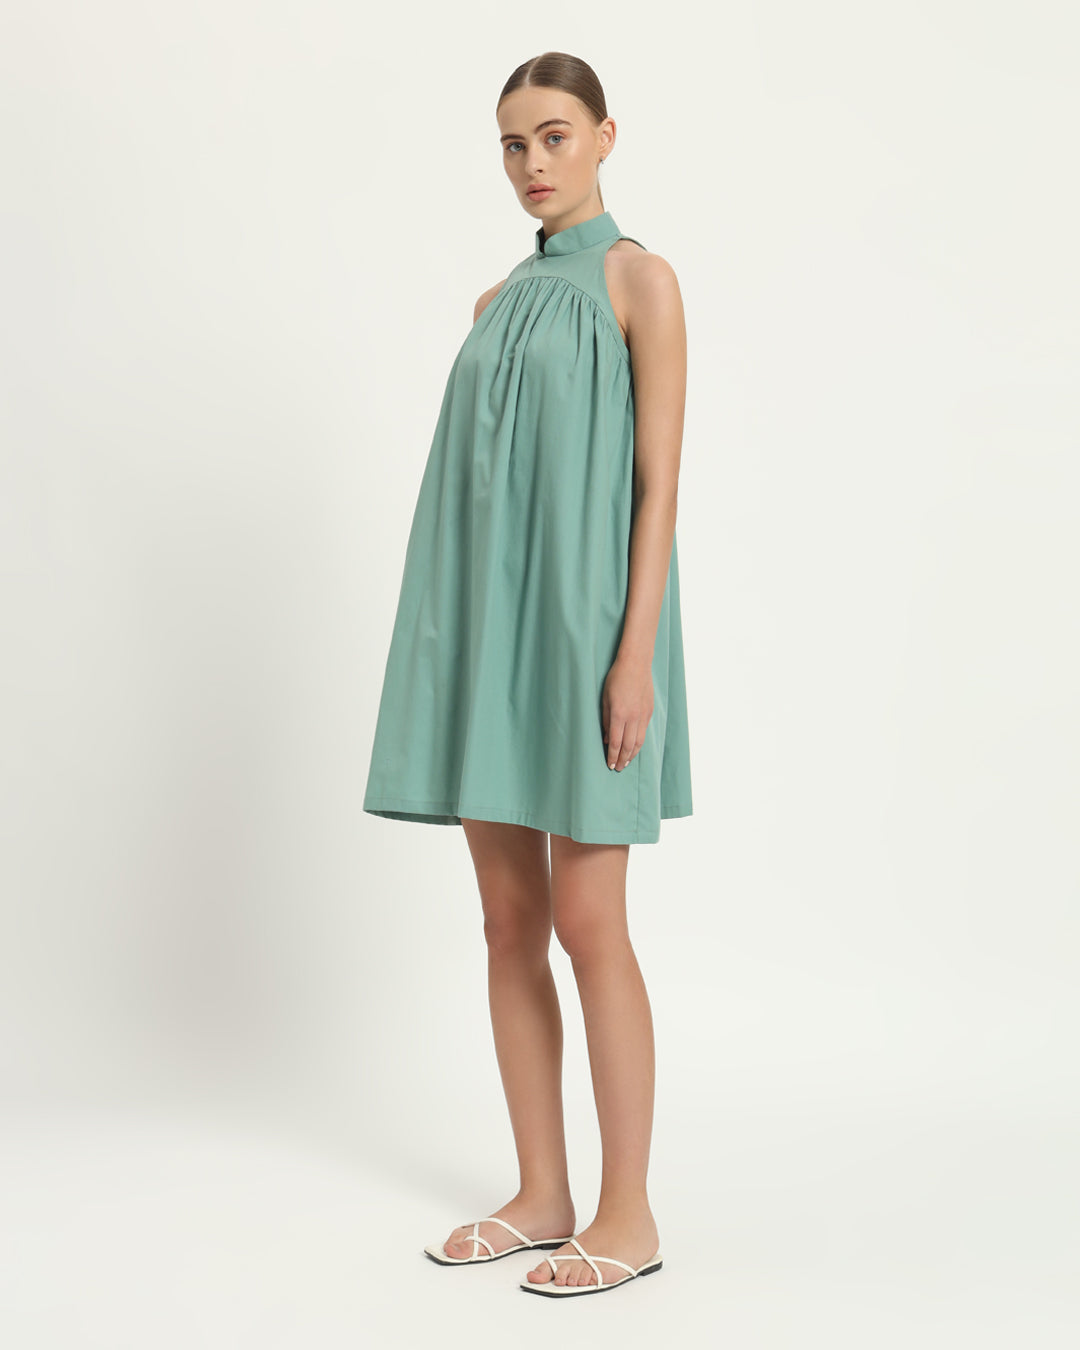 The Eruft Mint Cotton Dress